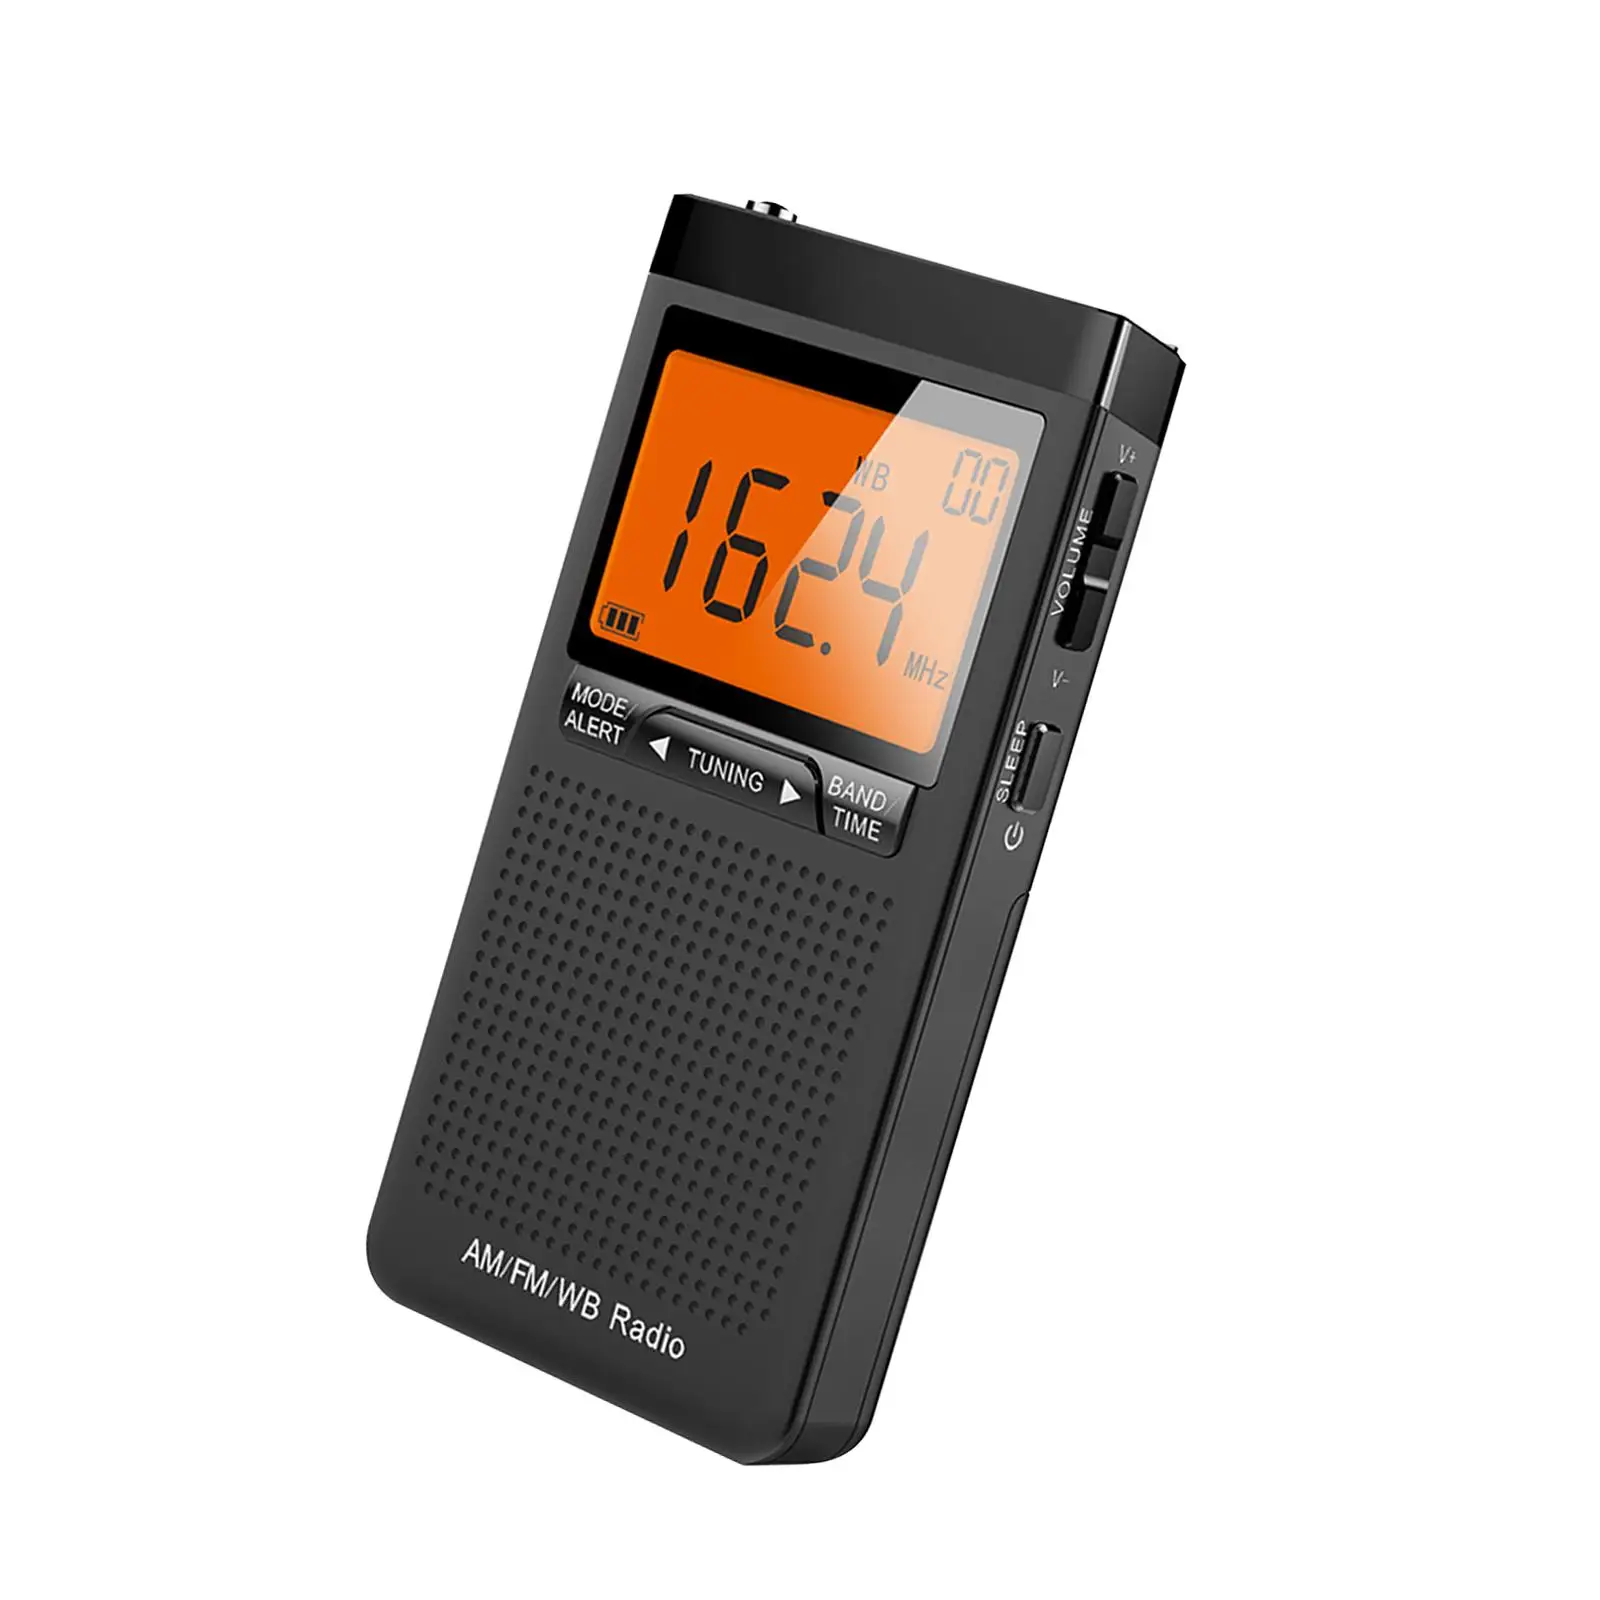 Portable Radio AM FM Digital Tuning with Headphone Jack Stereo Personal Radio Alarm Clock for Jogging Camping Walking Gym